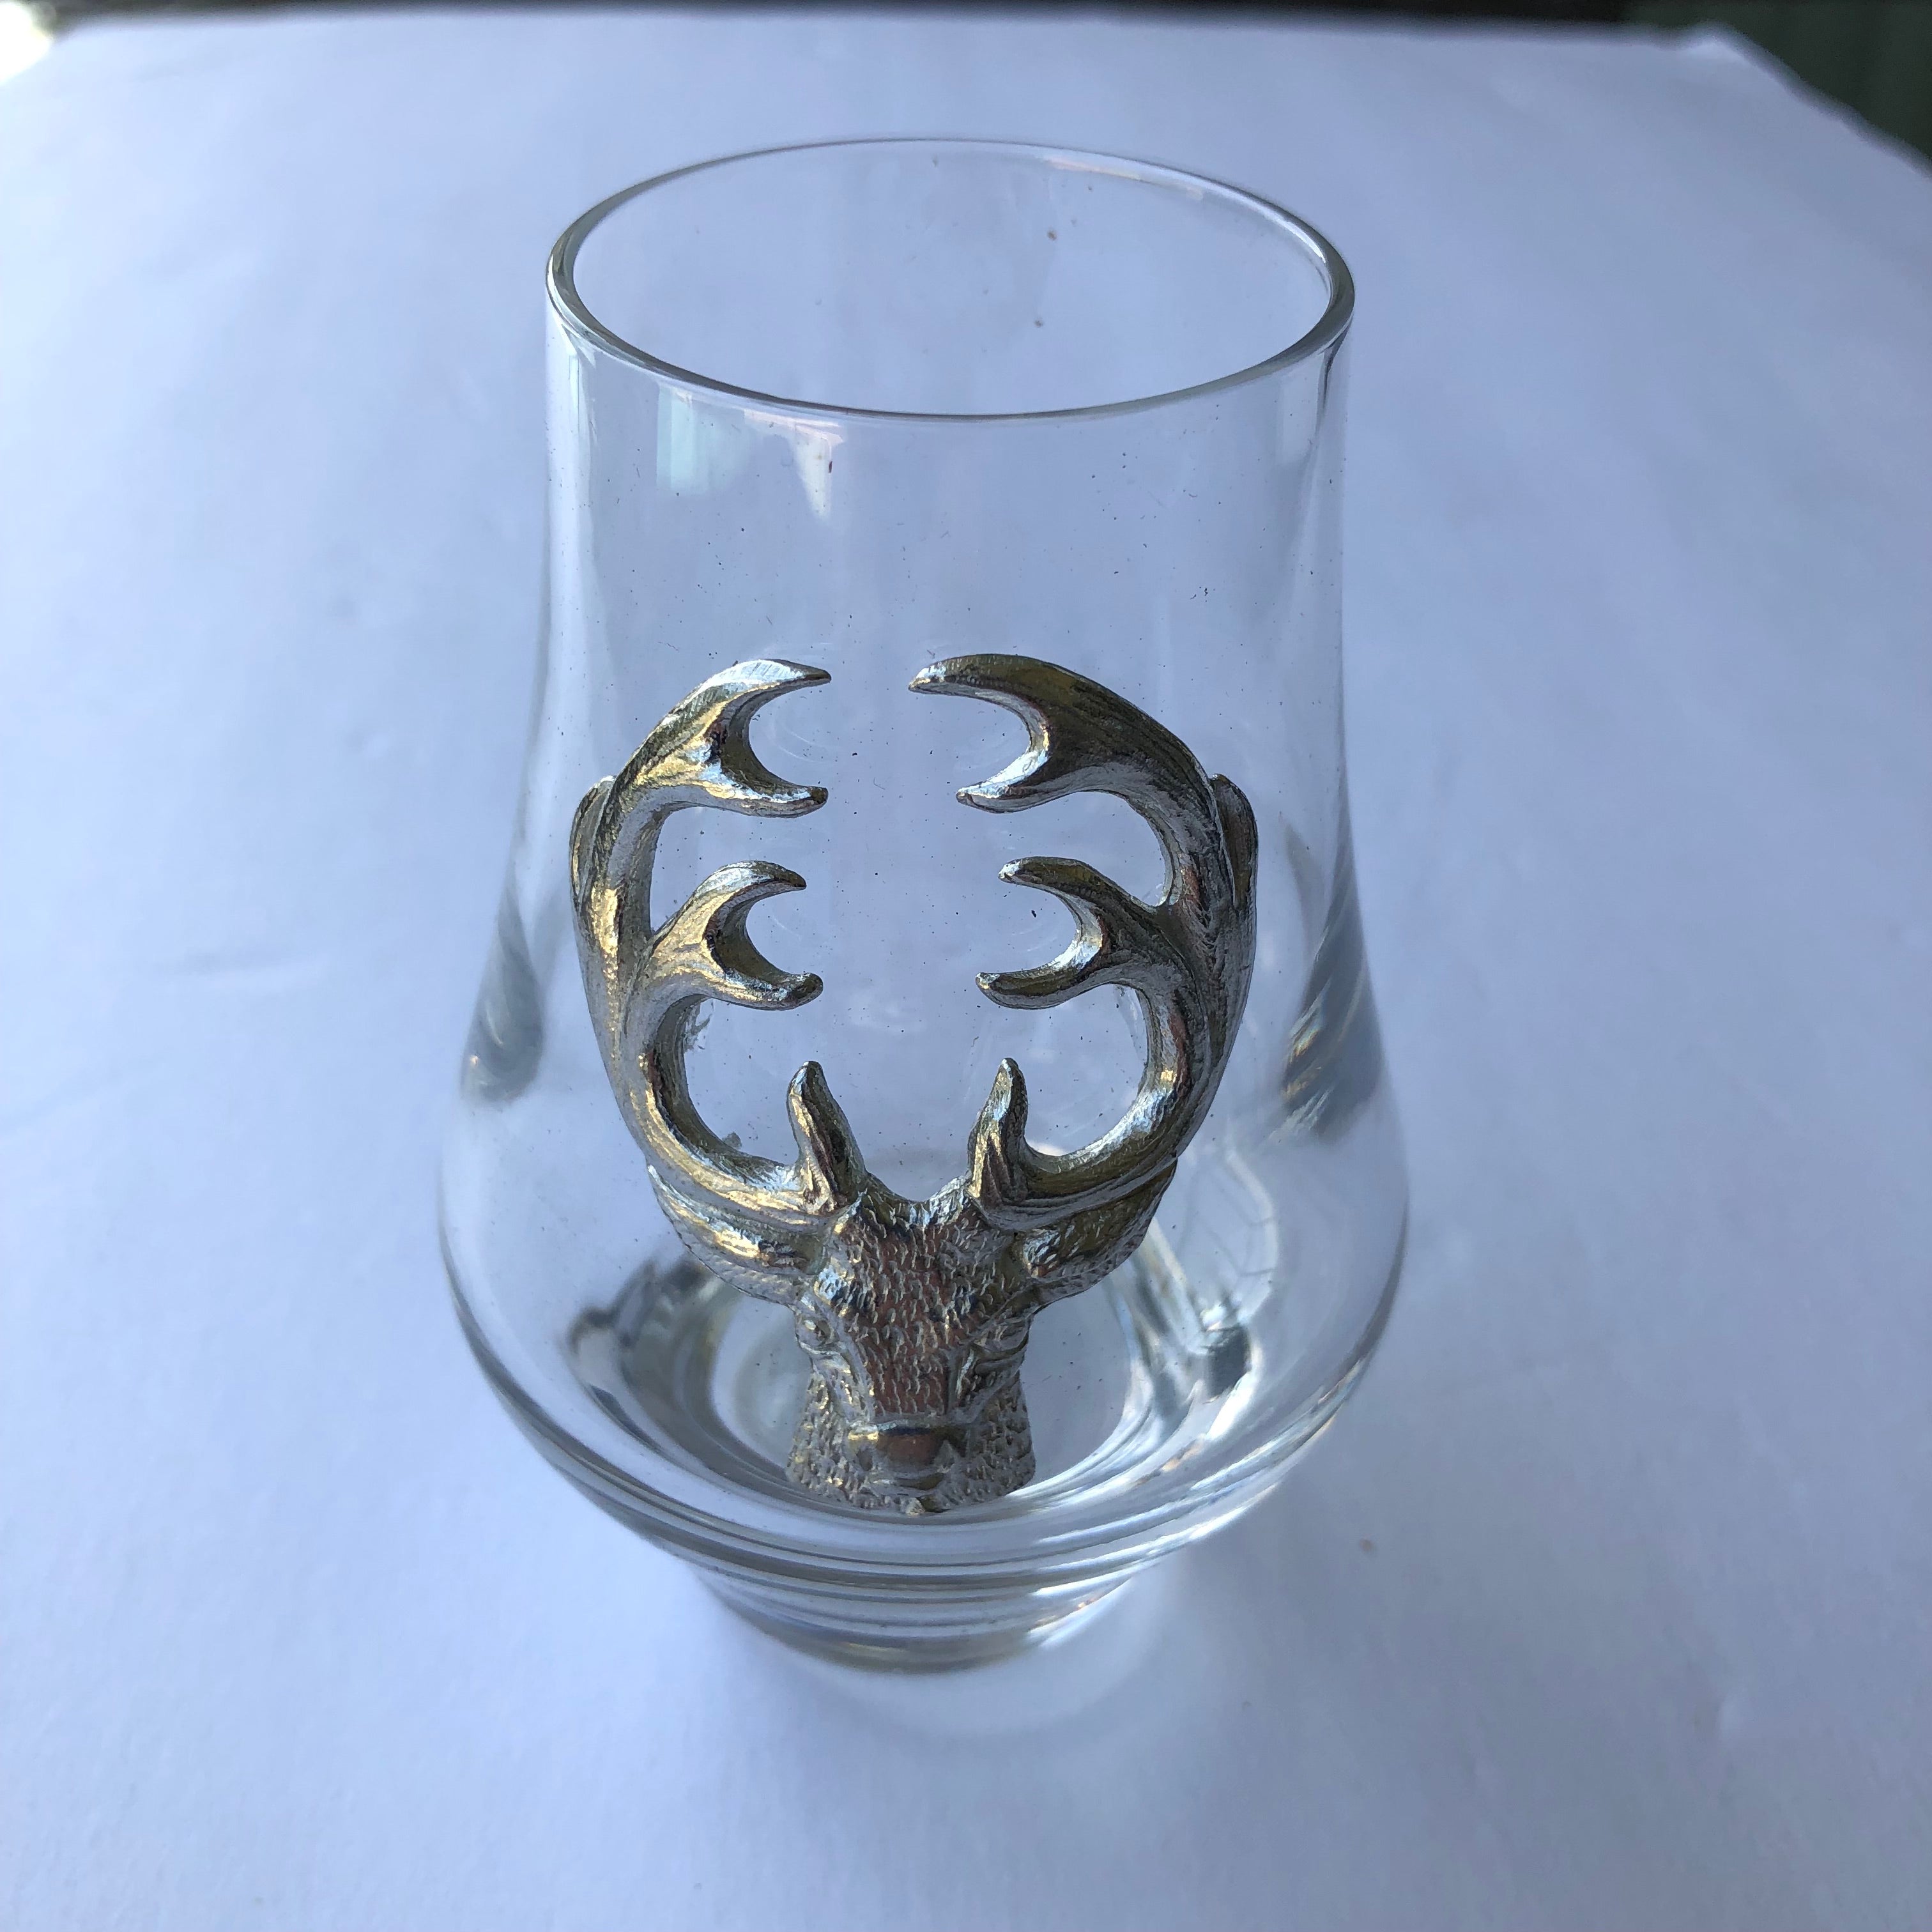 Handmade Pewter Tasting Glass - Stag / Buck